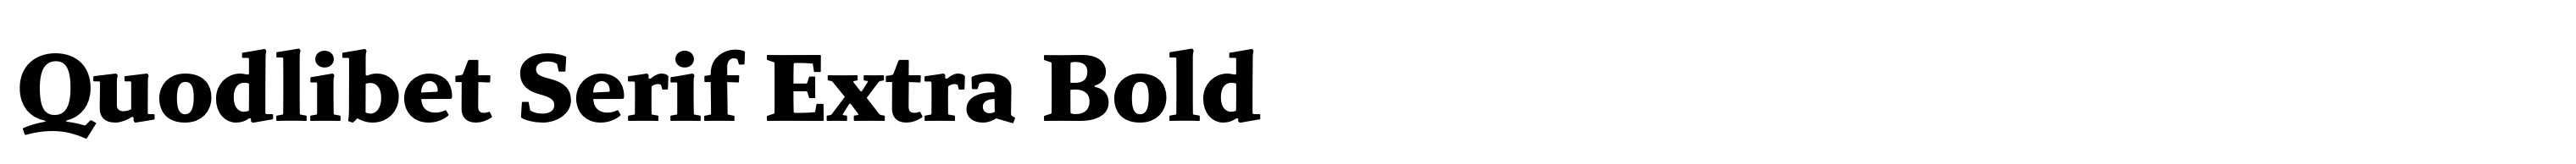 Quodlibet Serif Extra Bold